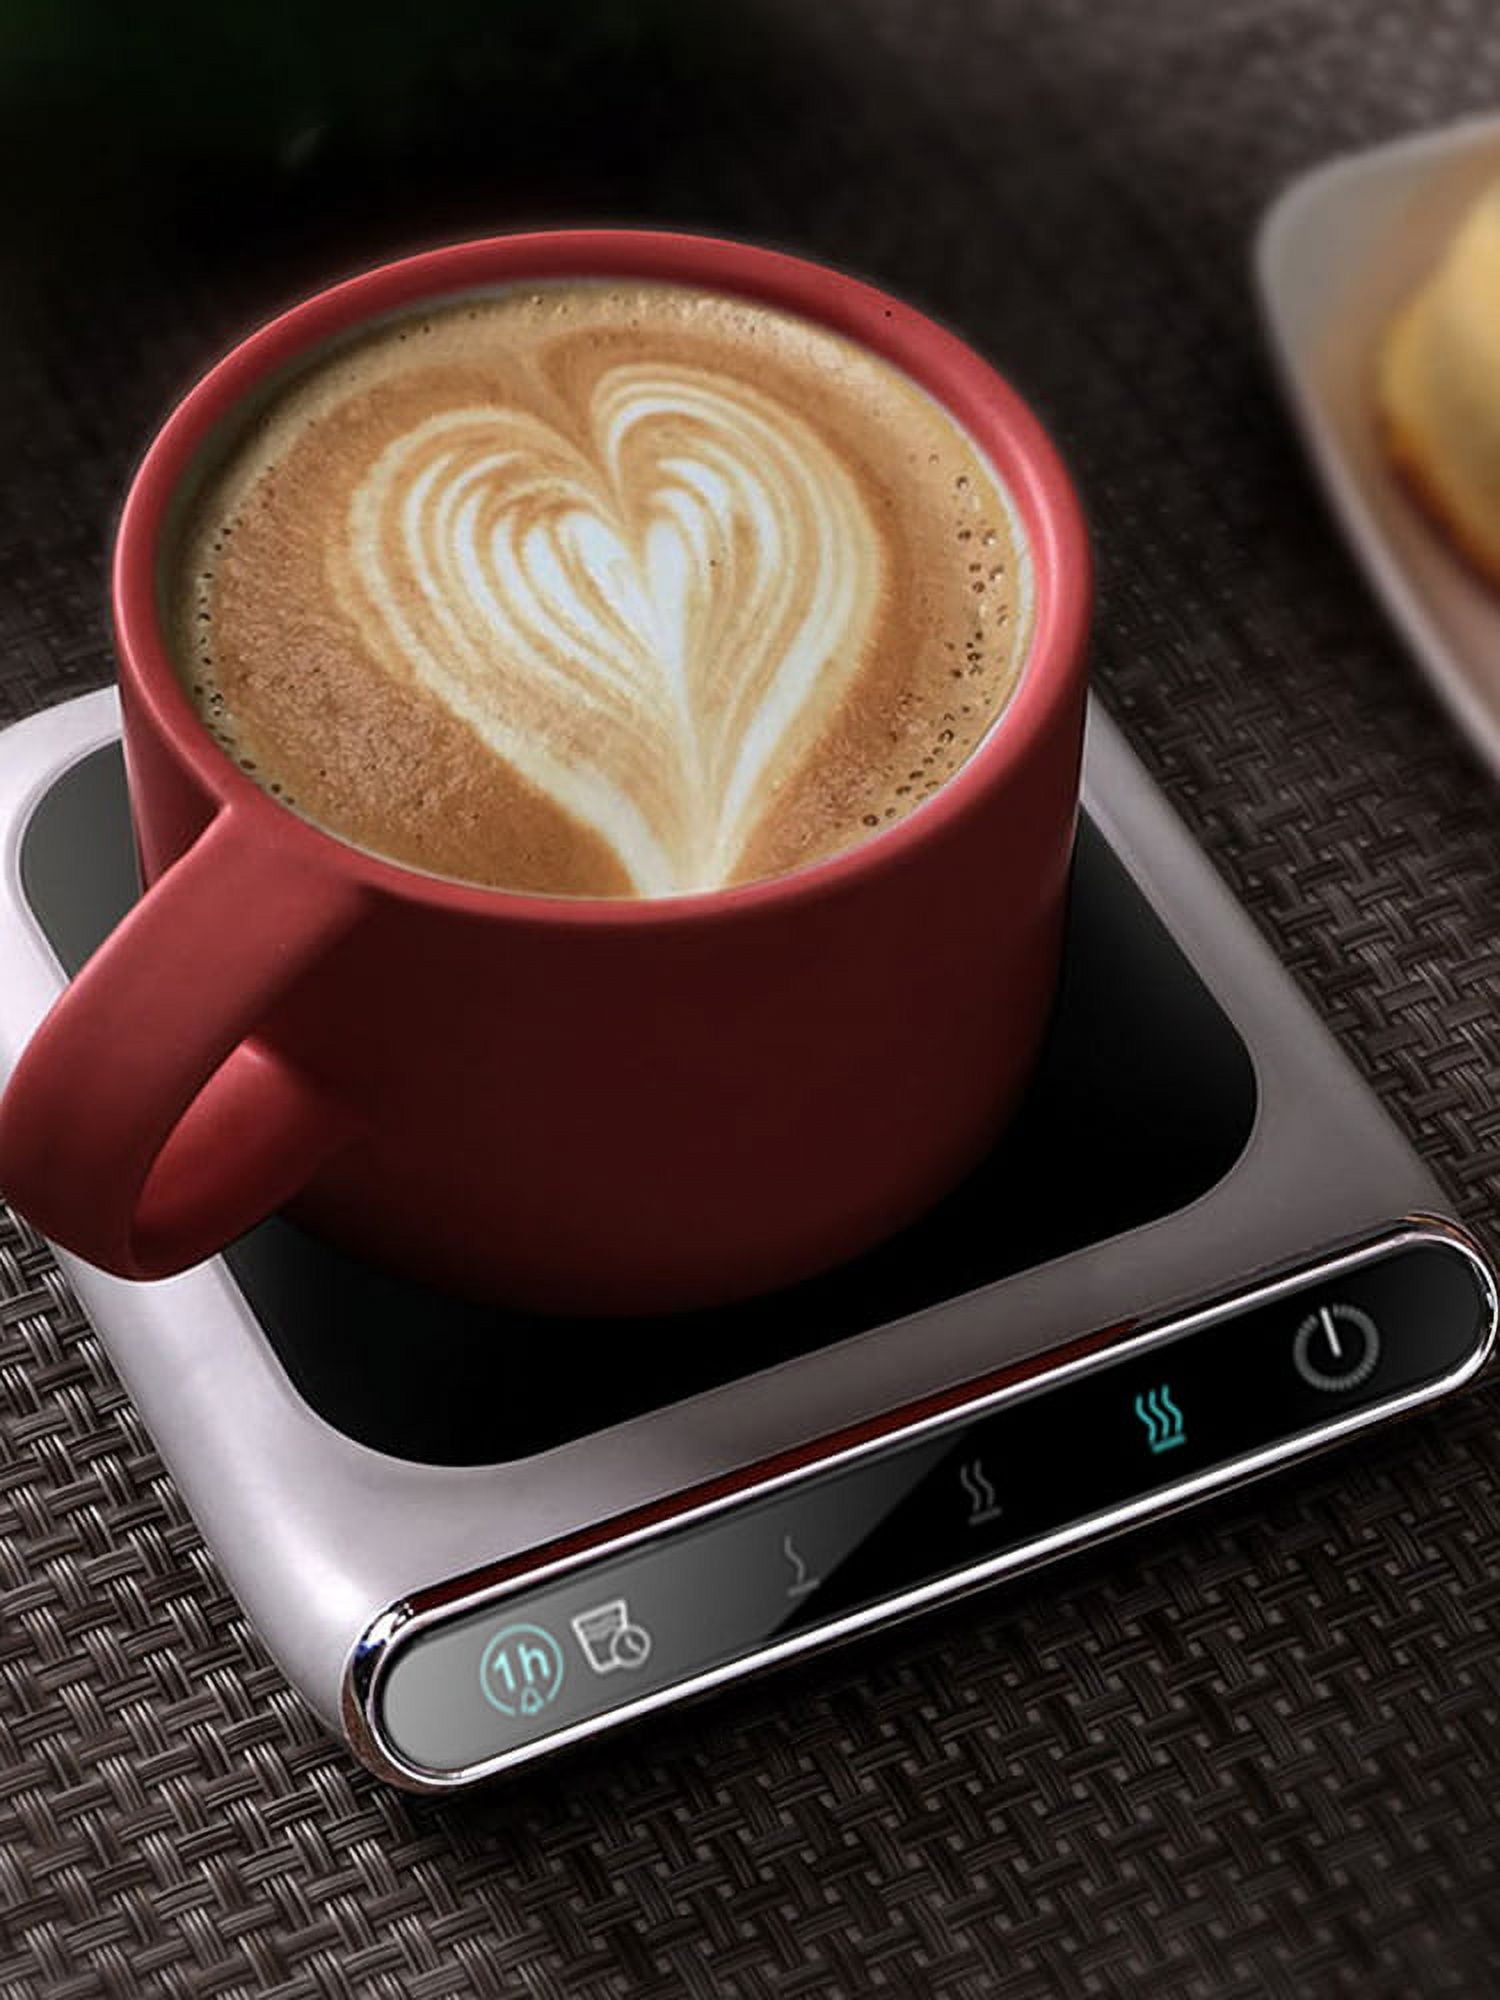 Portable Coffee Mug Warmer Adjustable 3 Temperature Settings Smart